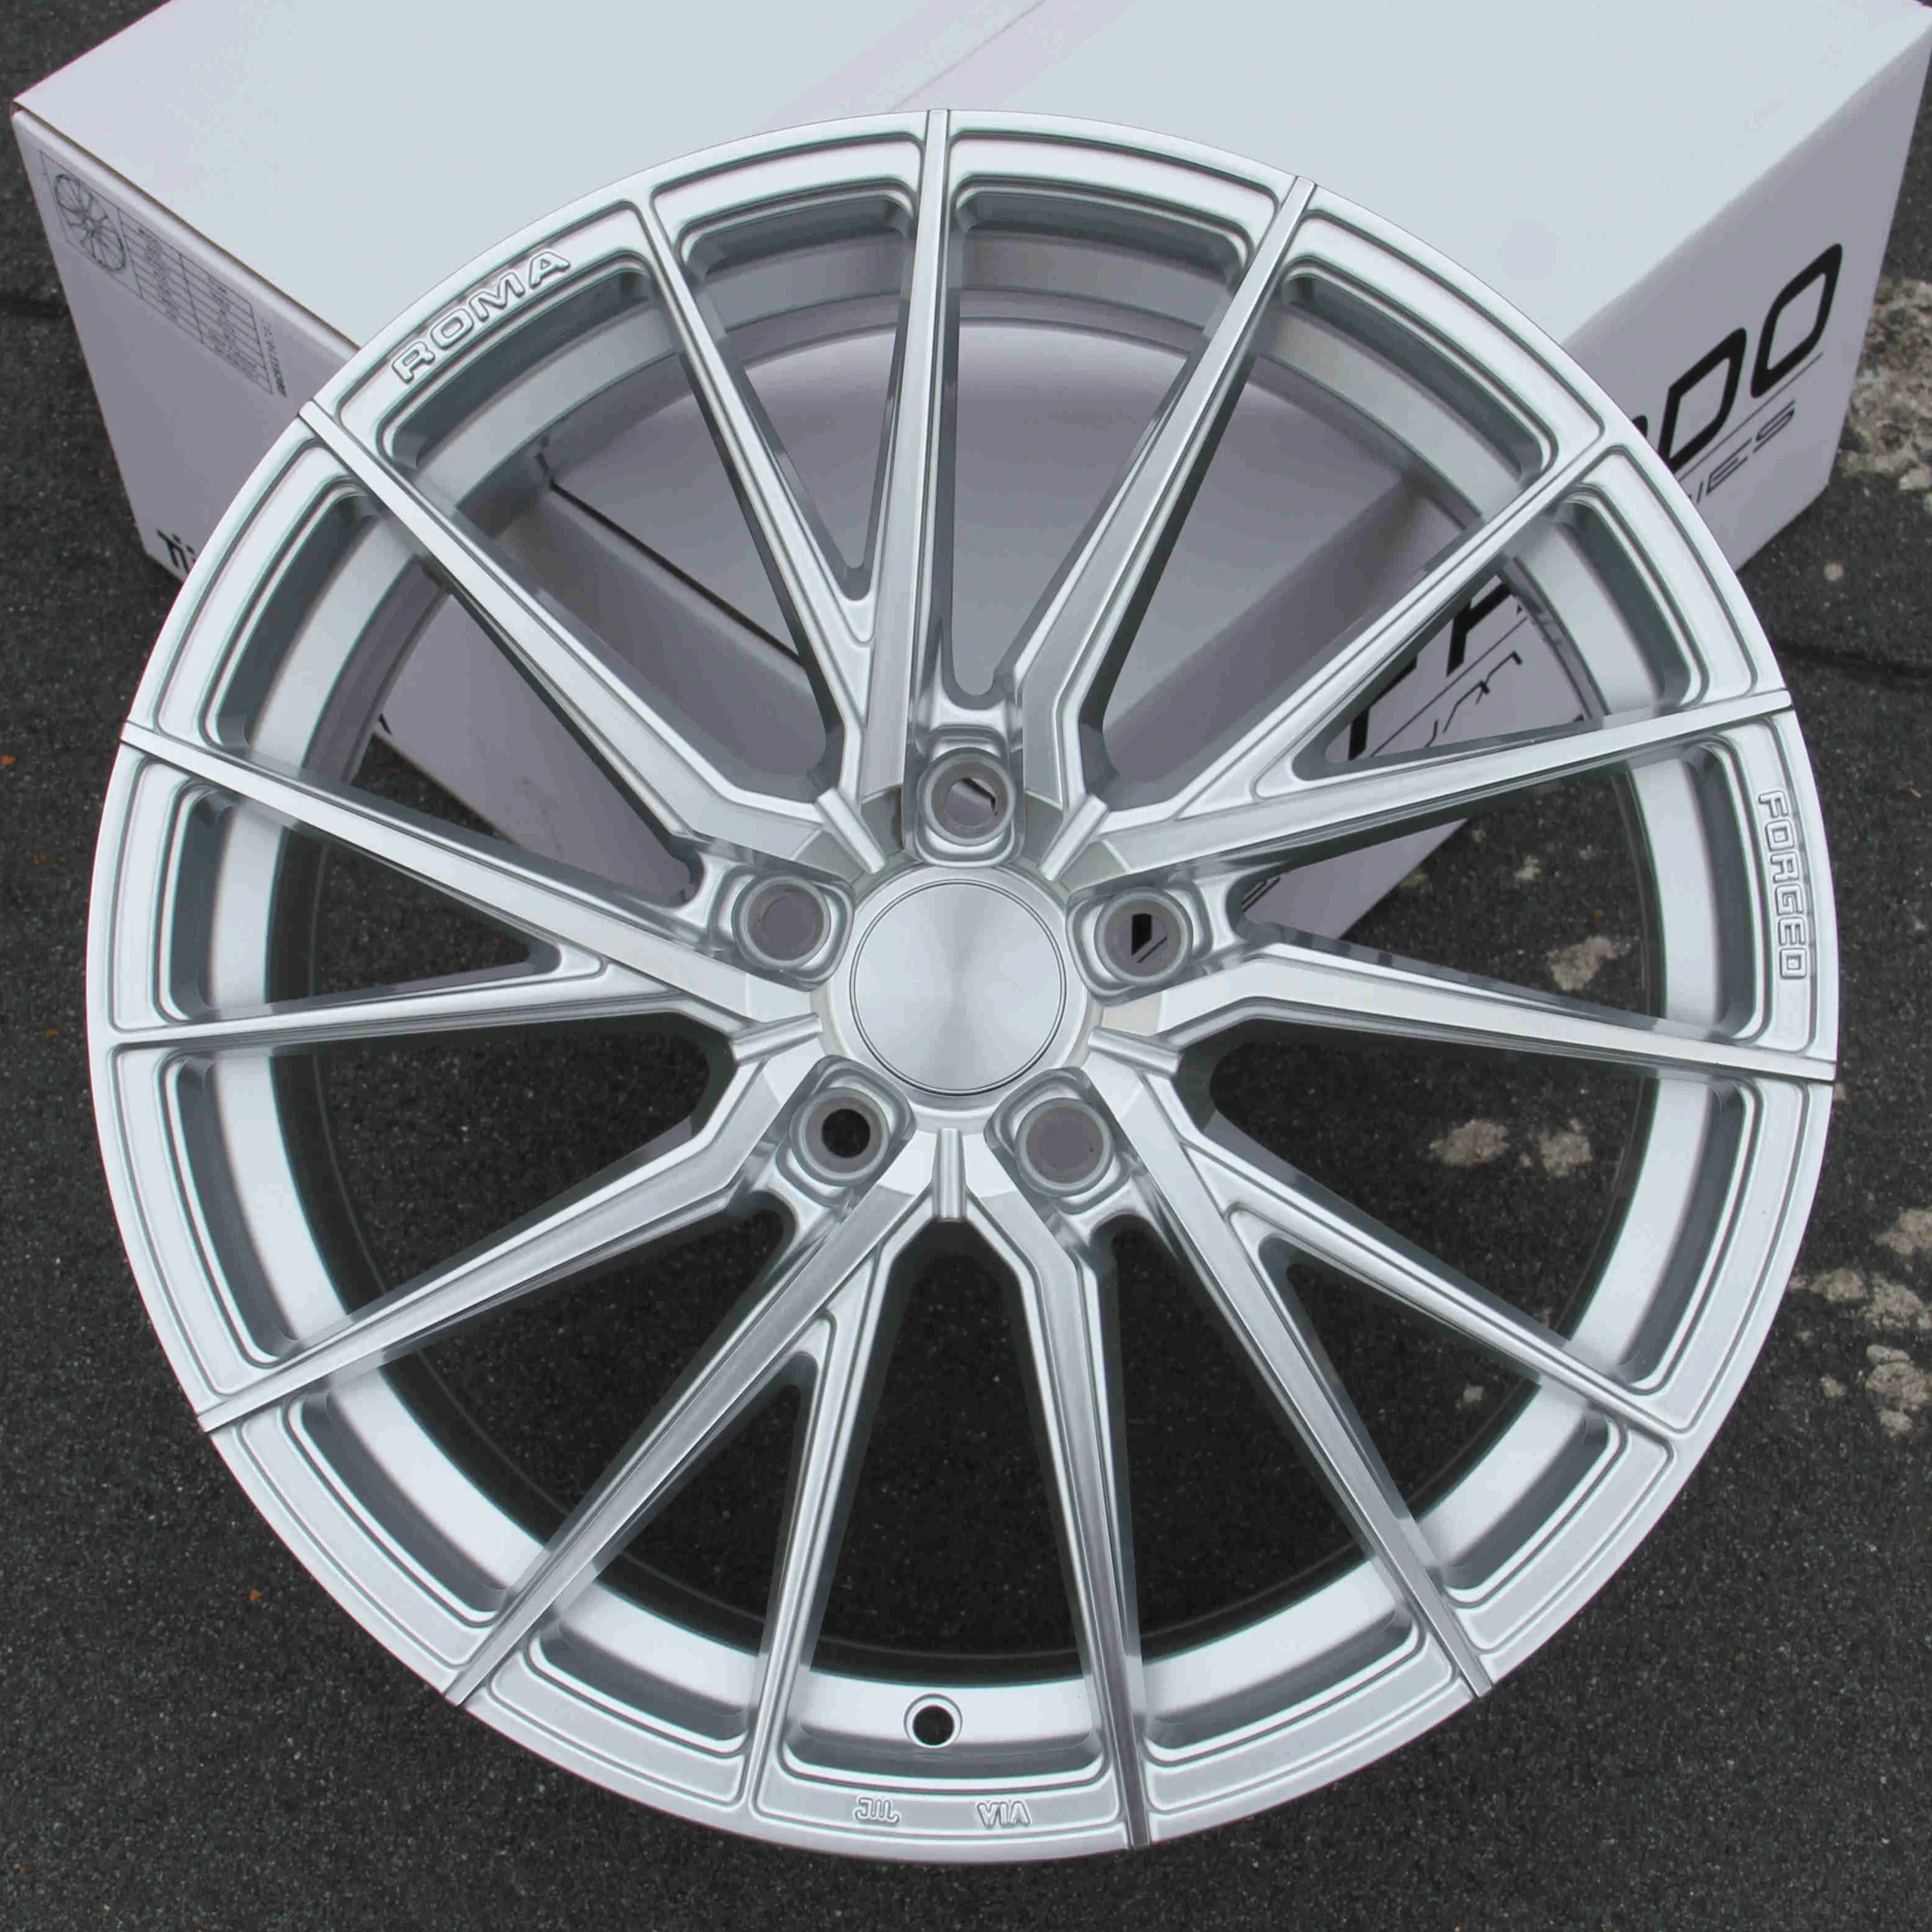 Bku racing 5x120 wheels 18 inch 5 holes silver alloy Passenger Car Wheels rims for F10 wheels bmw 3 4 5 6 7 series